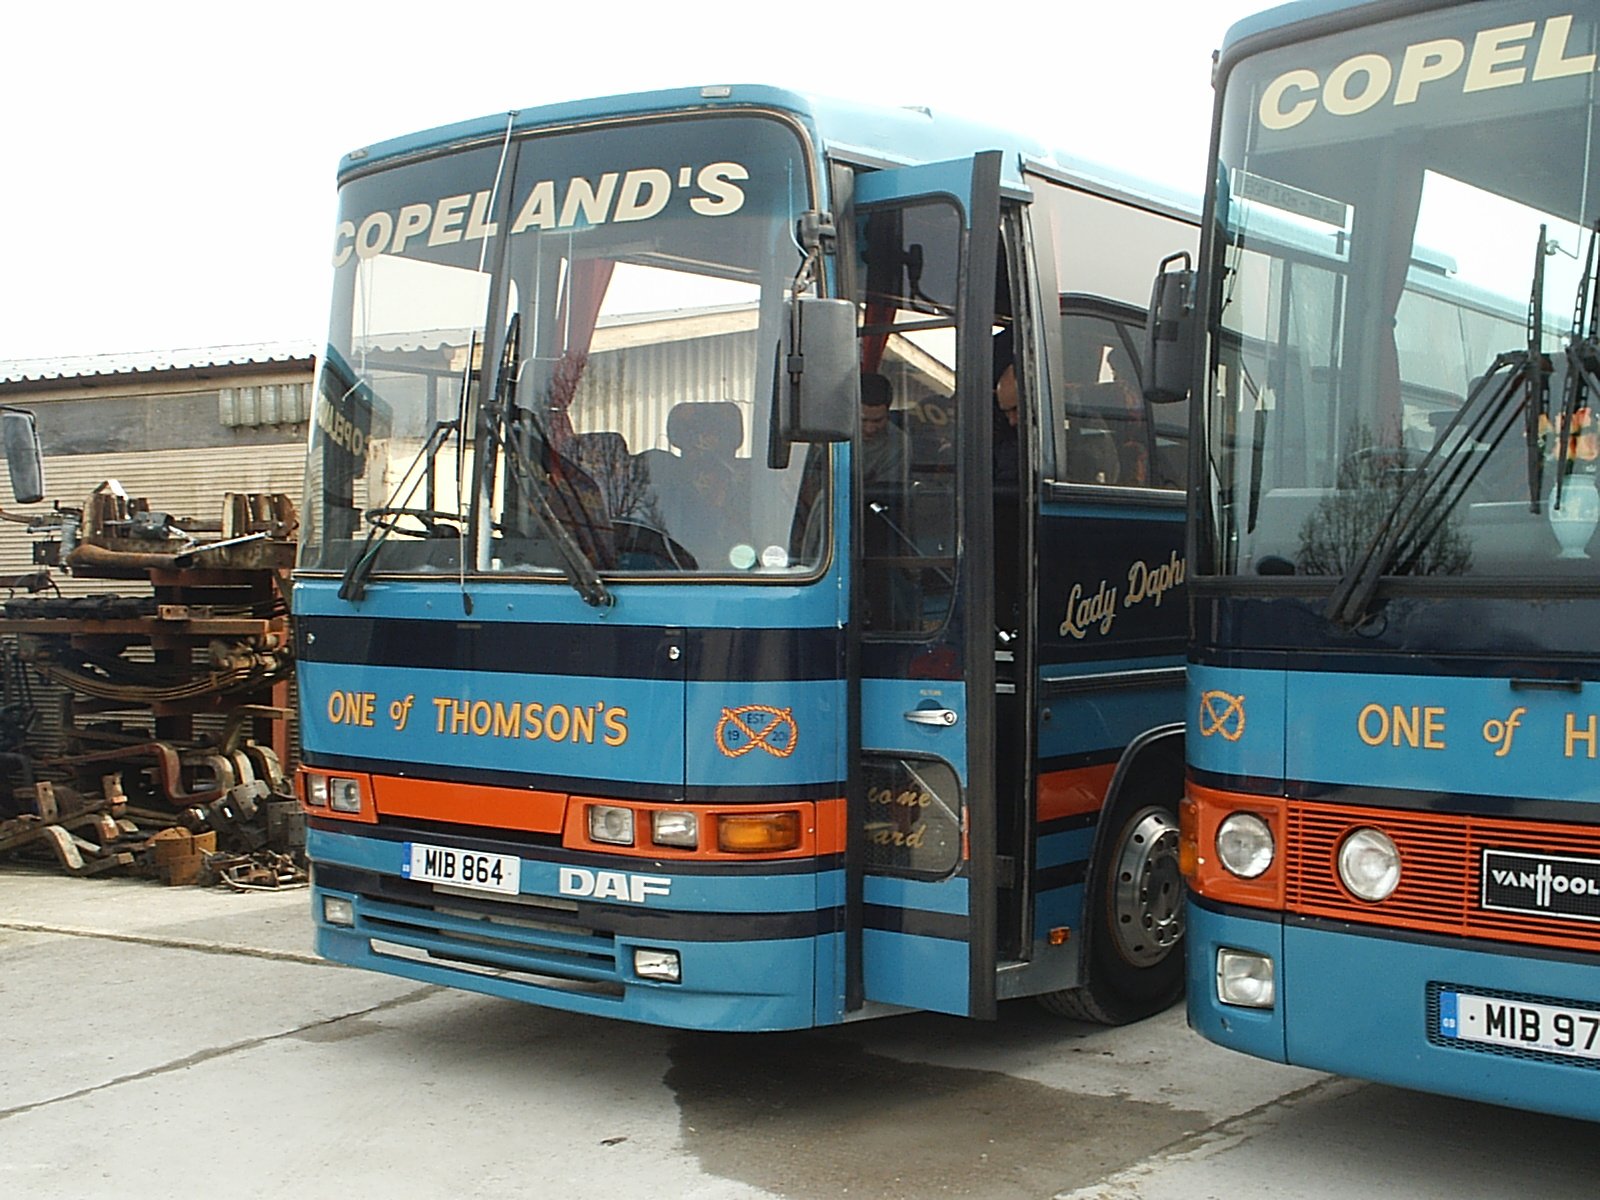 copeland's bus trips